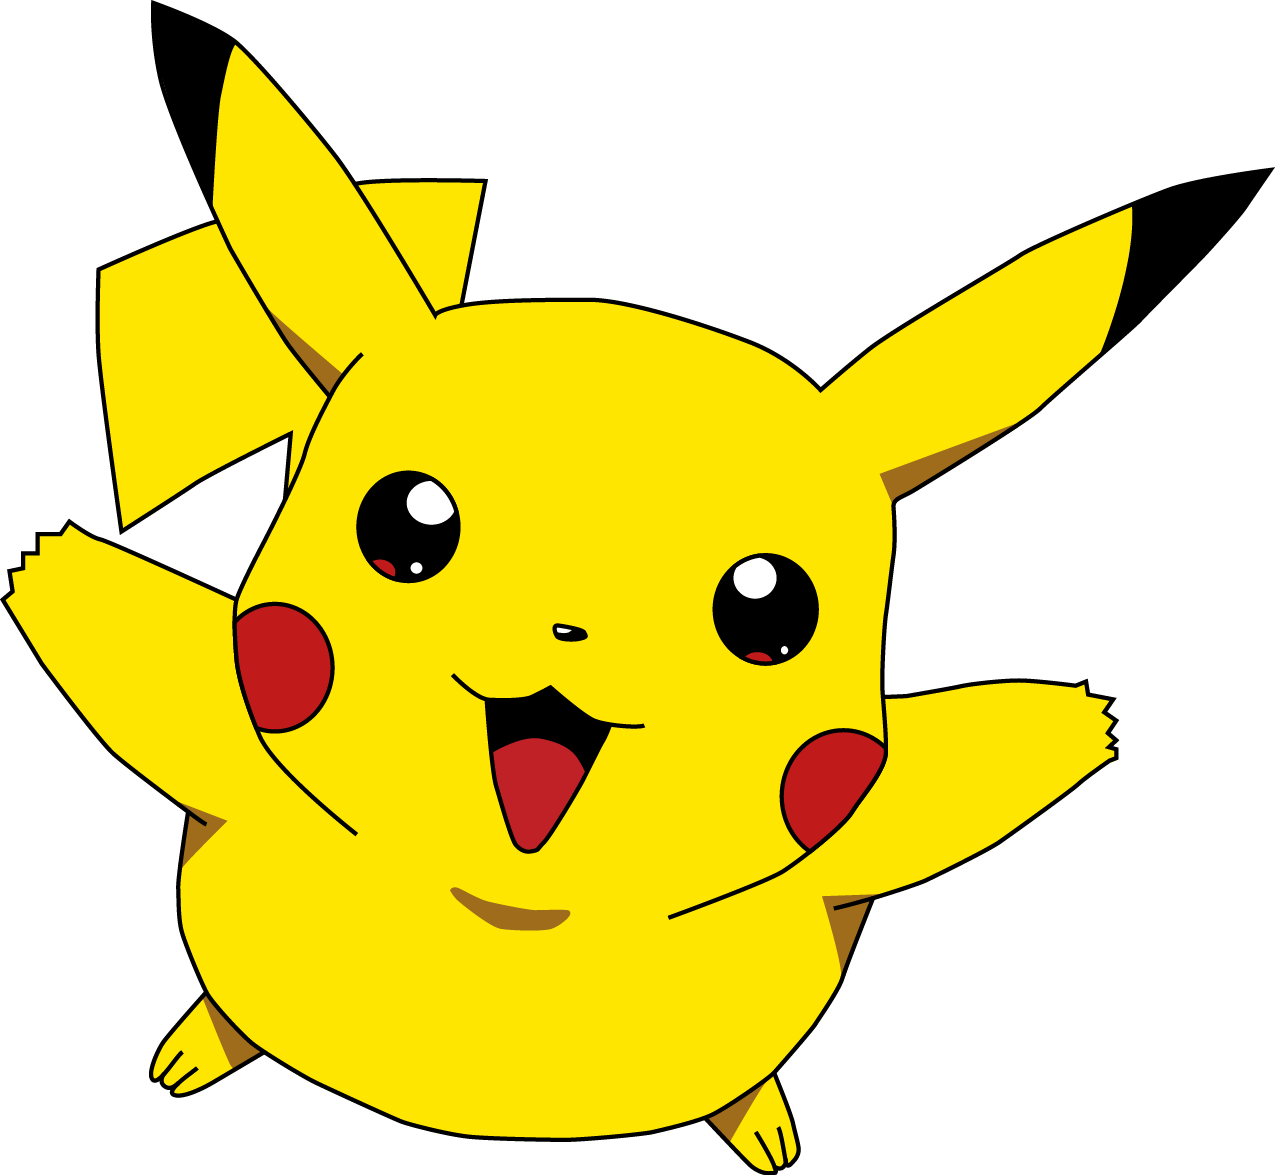 “Unprecedented” Pokemon game may change Pikachu in a big way